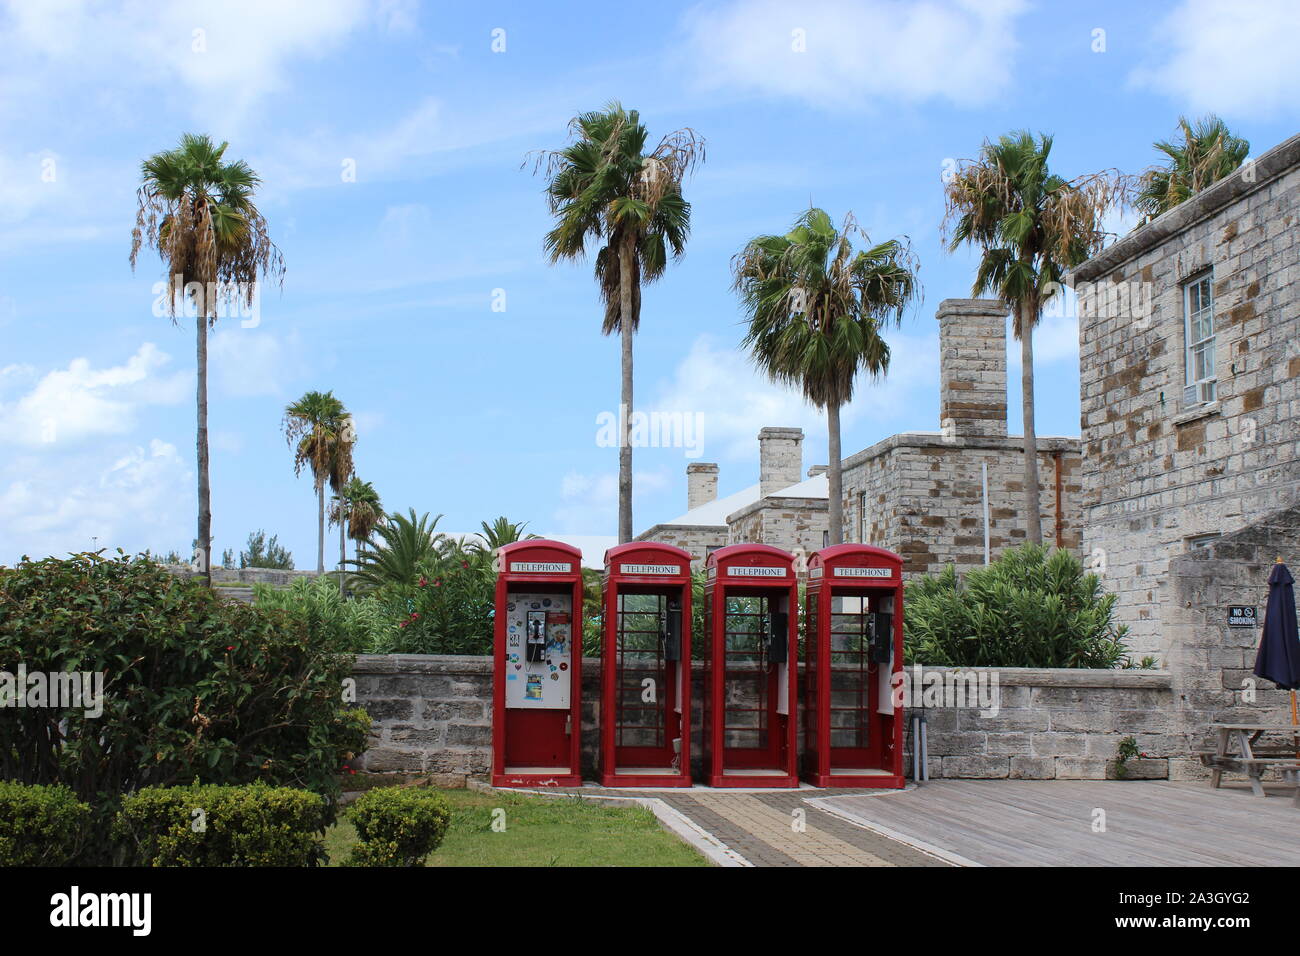 Traditional British phone booths at Royal Naval Dockyard, Bermuda Stock Photo